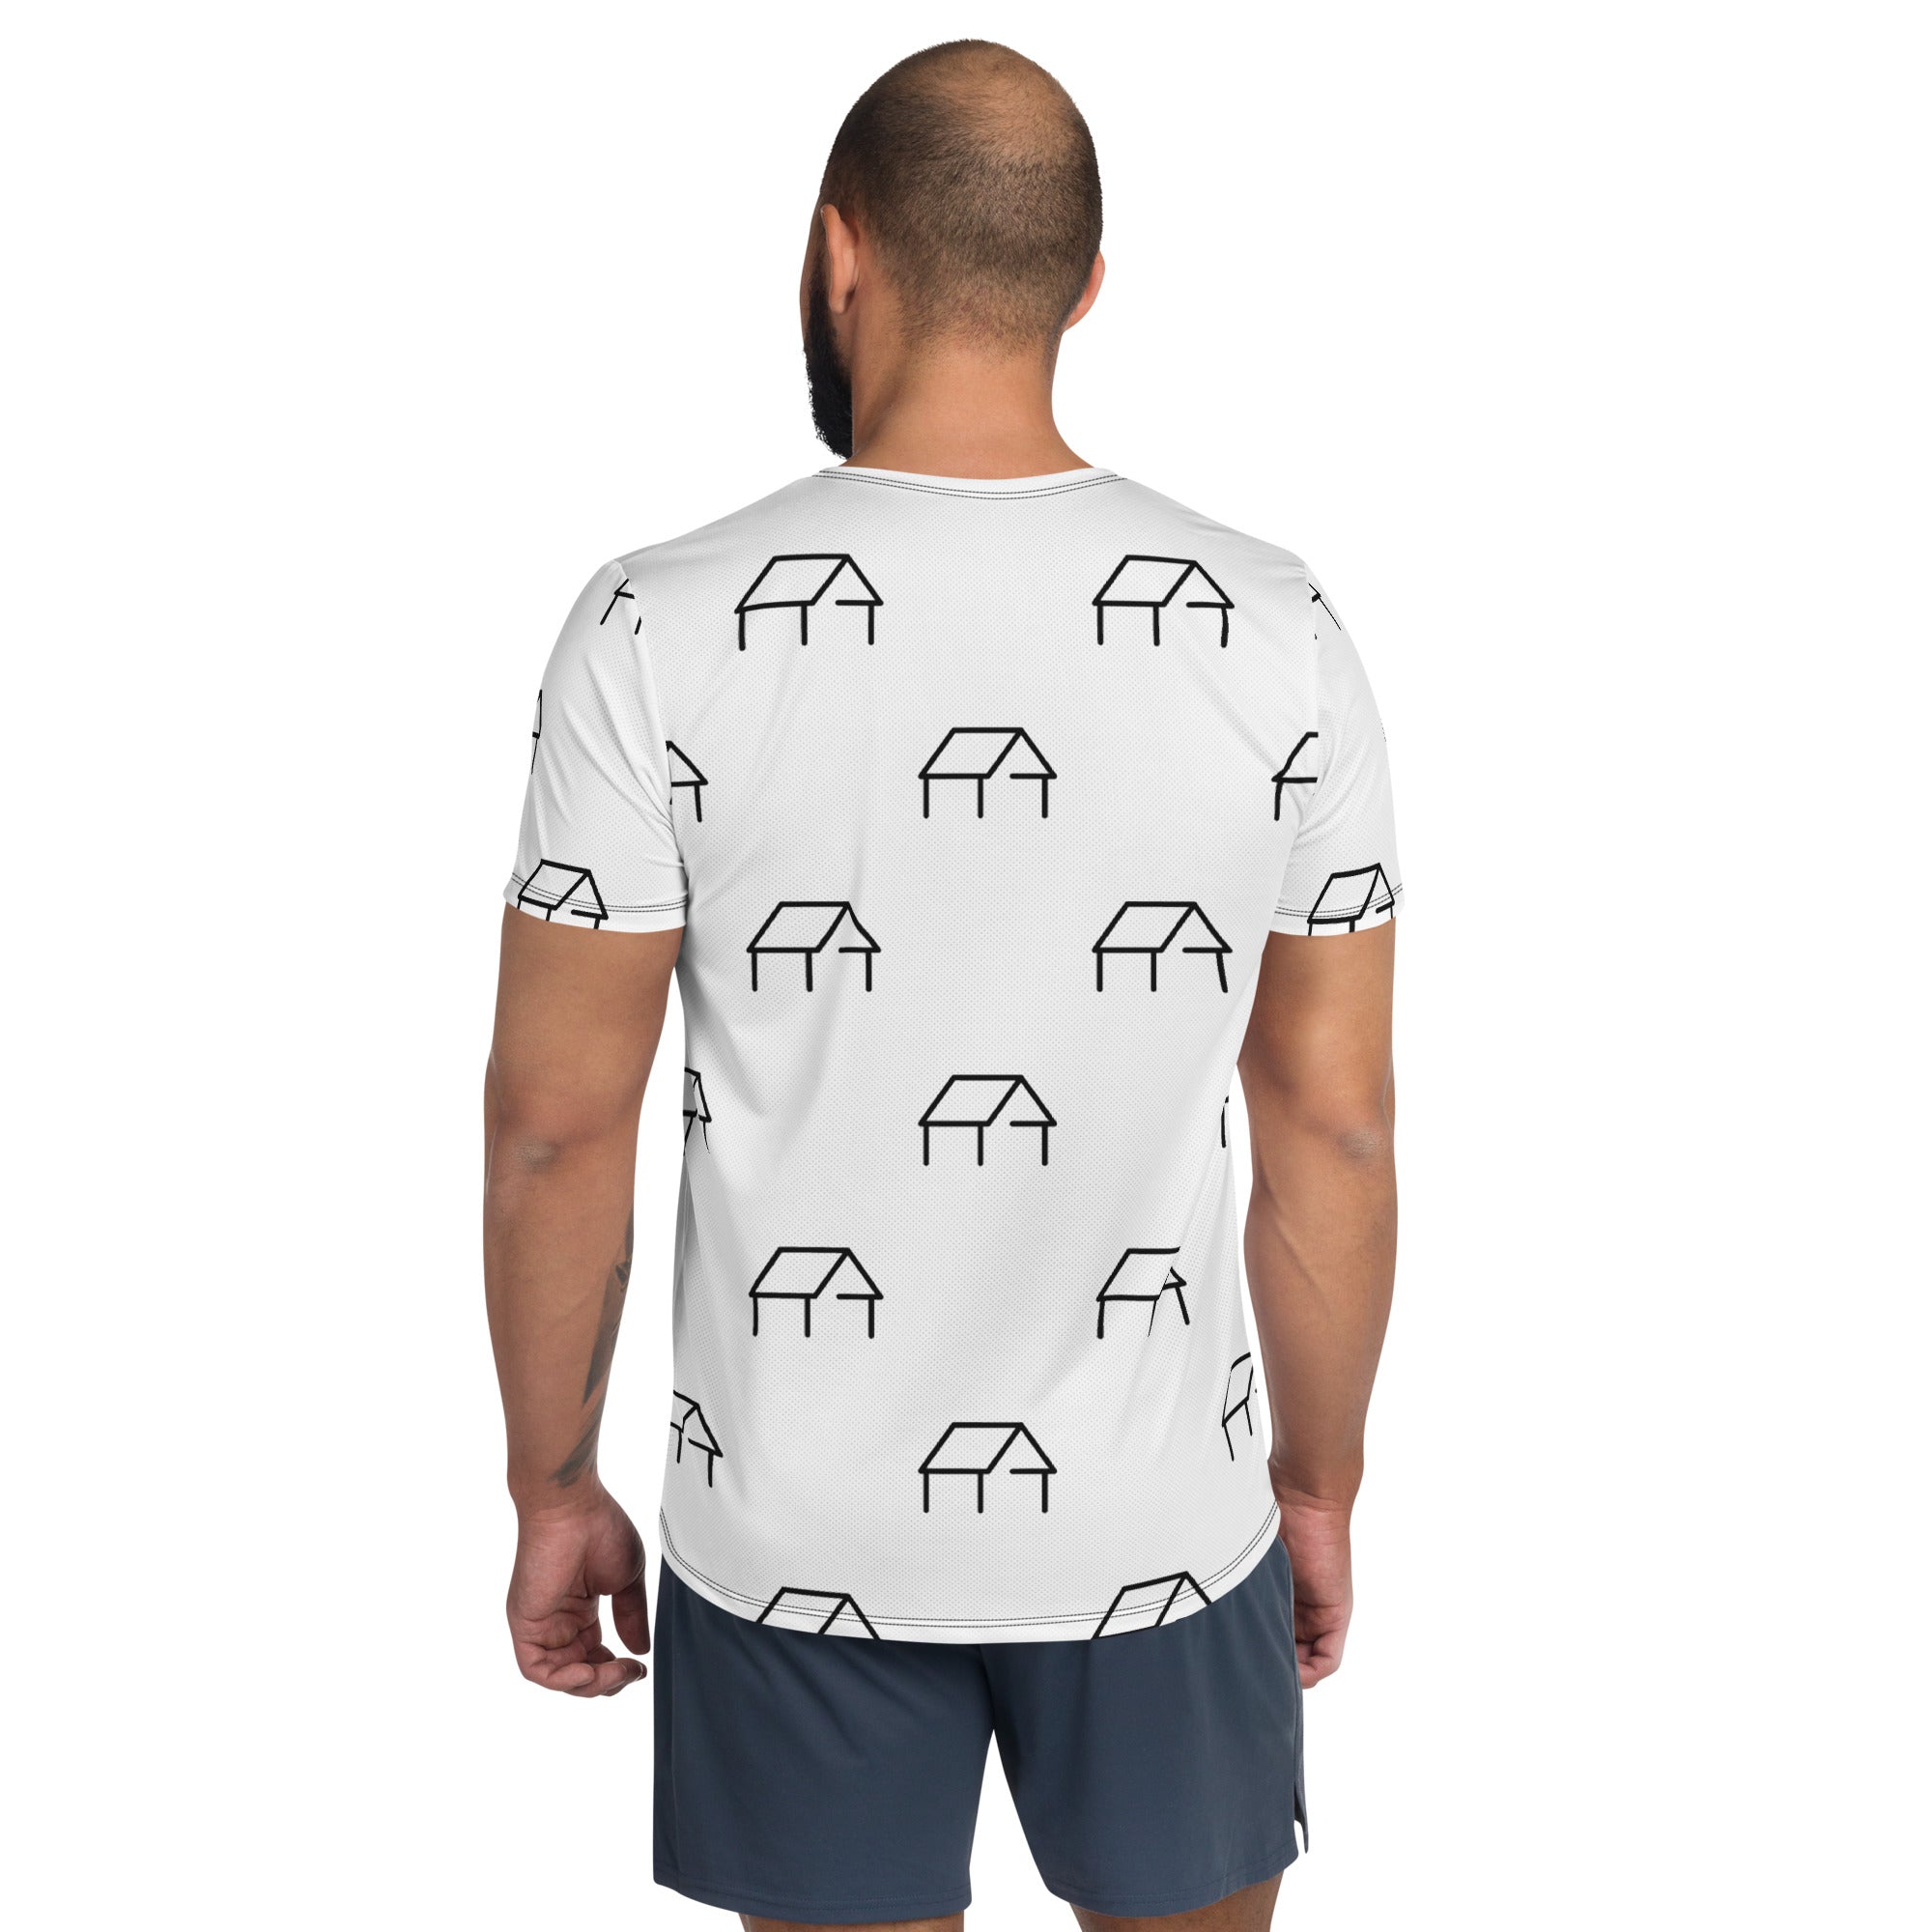 C21 Beggins Homes All-Over Print Men's Athletic T-shirt